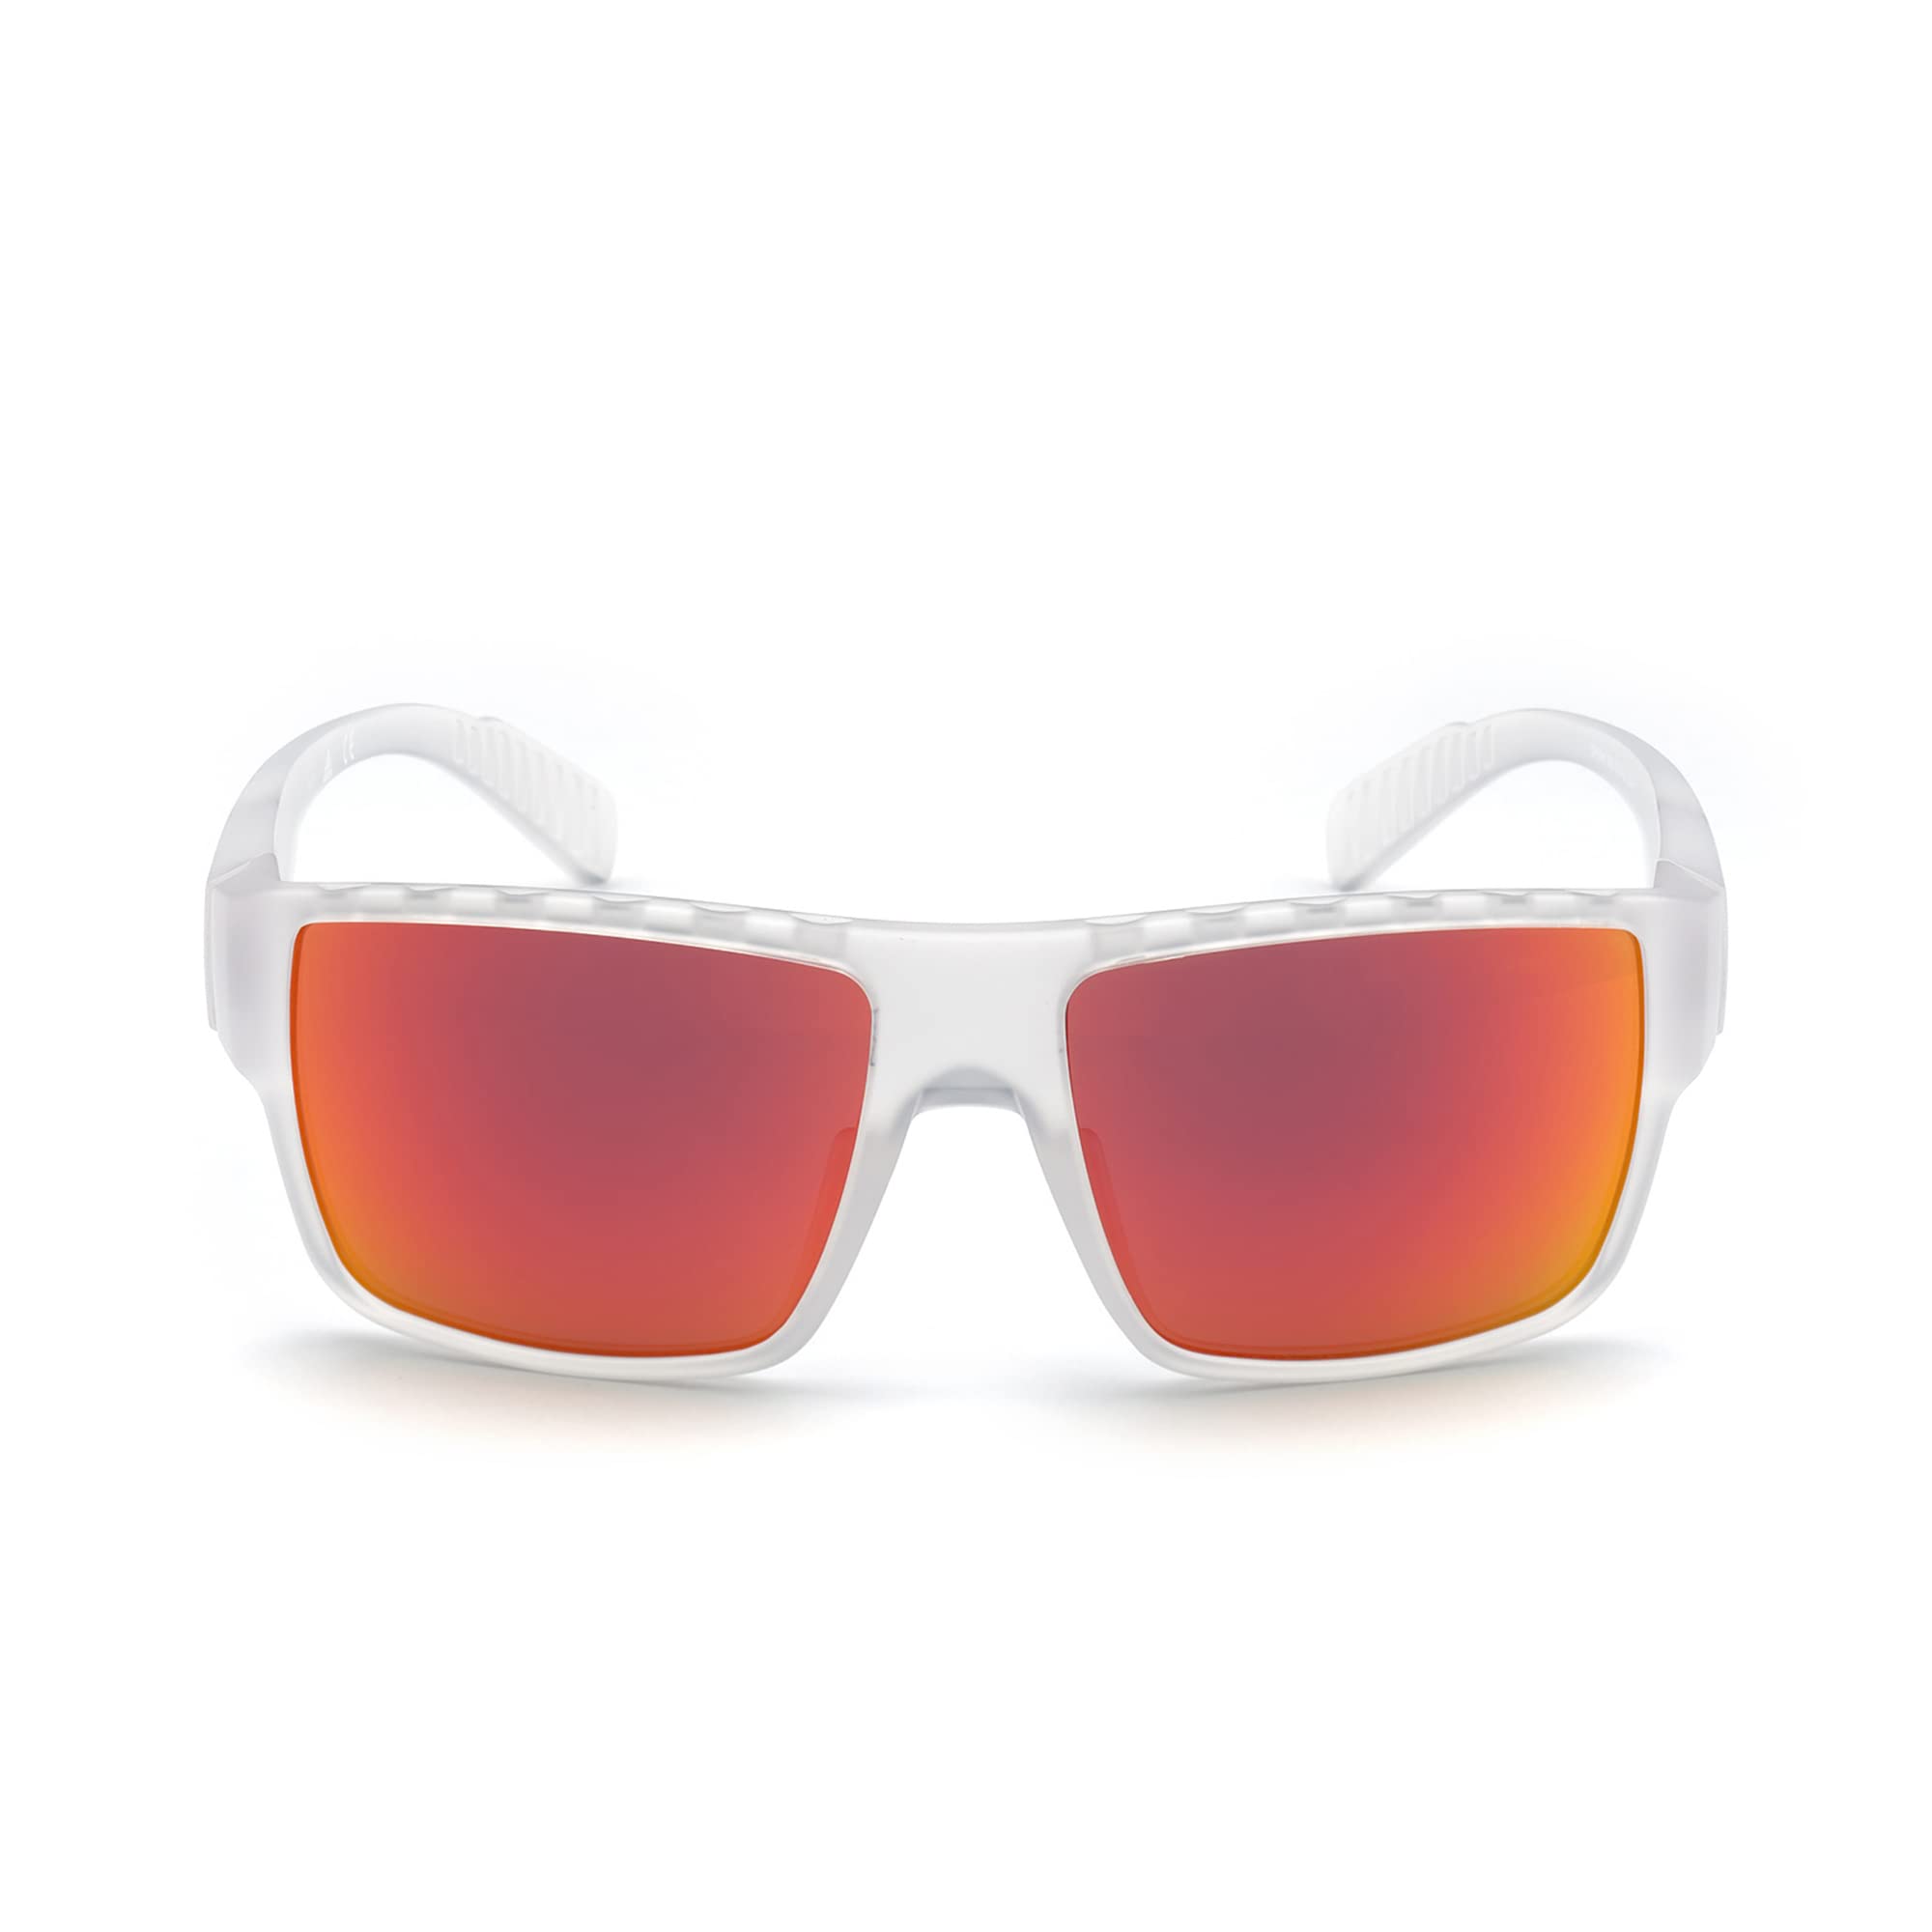 adidas Men's Sp0006 Pilot Sunglasses